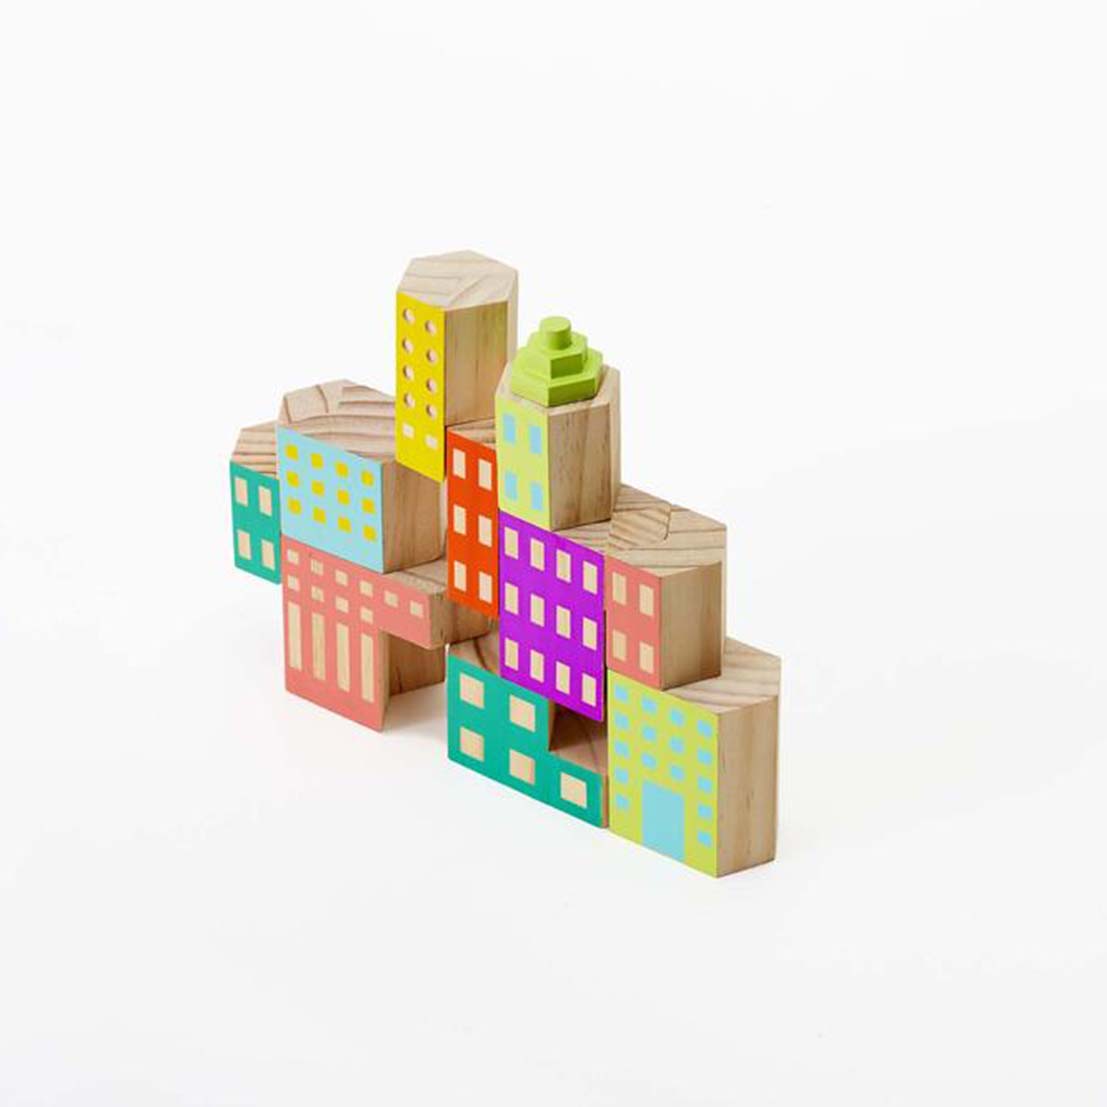 Blockitecture - Deco